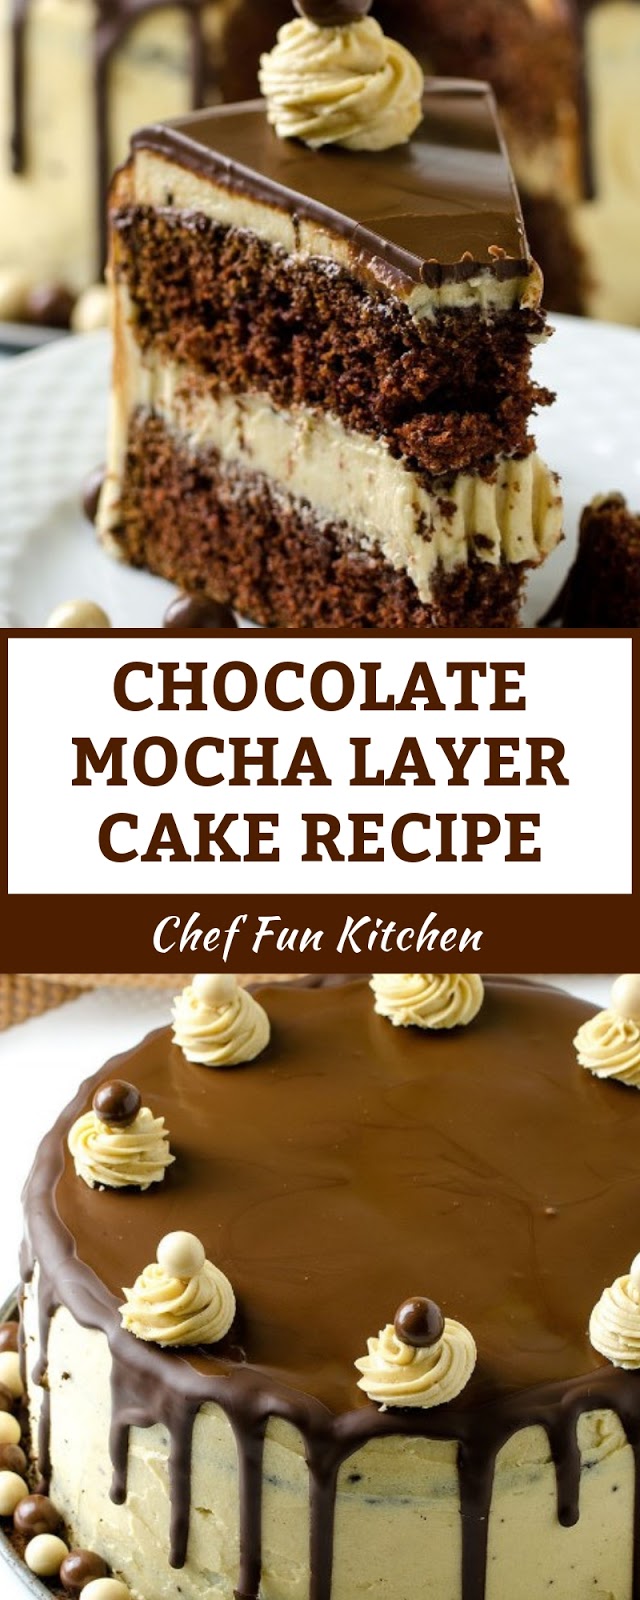 CHOCOLATE MOCHA LAYER CAKE RECIPE